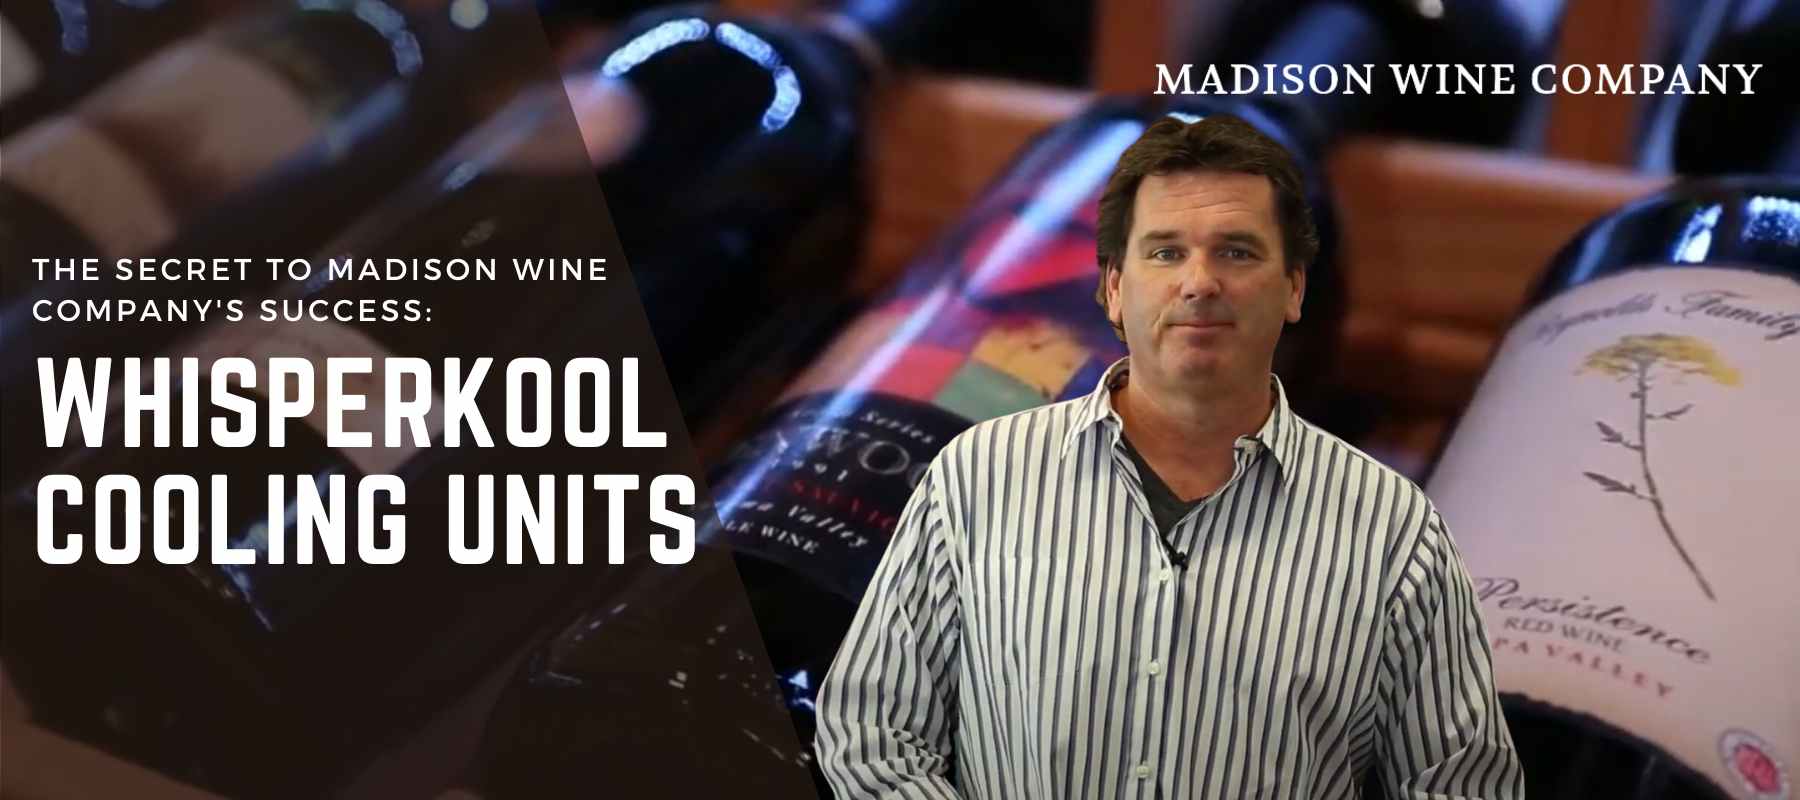 The Secret to Madison Wine Company's Success: WhisperKOOL Cooling Units